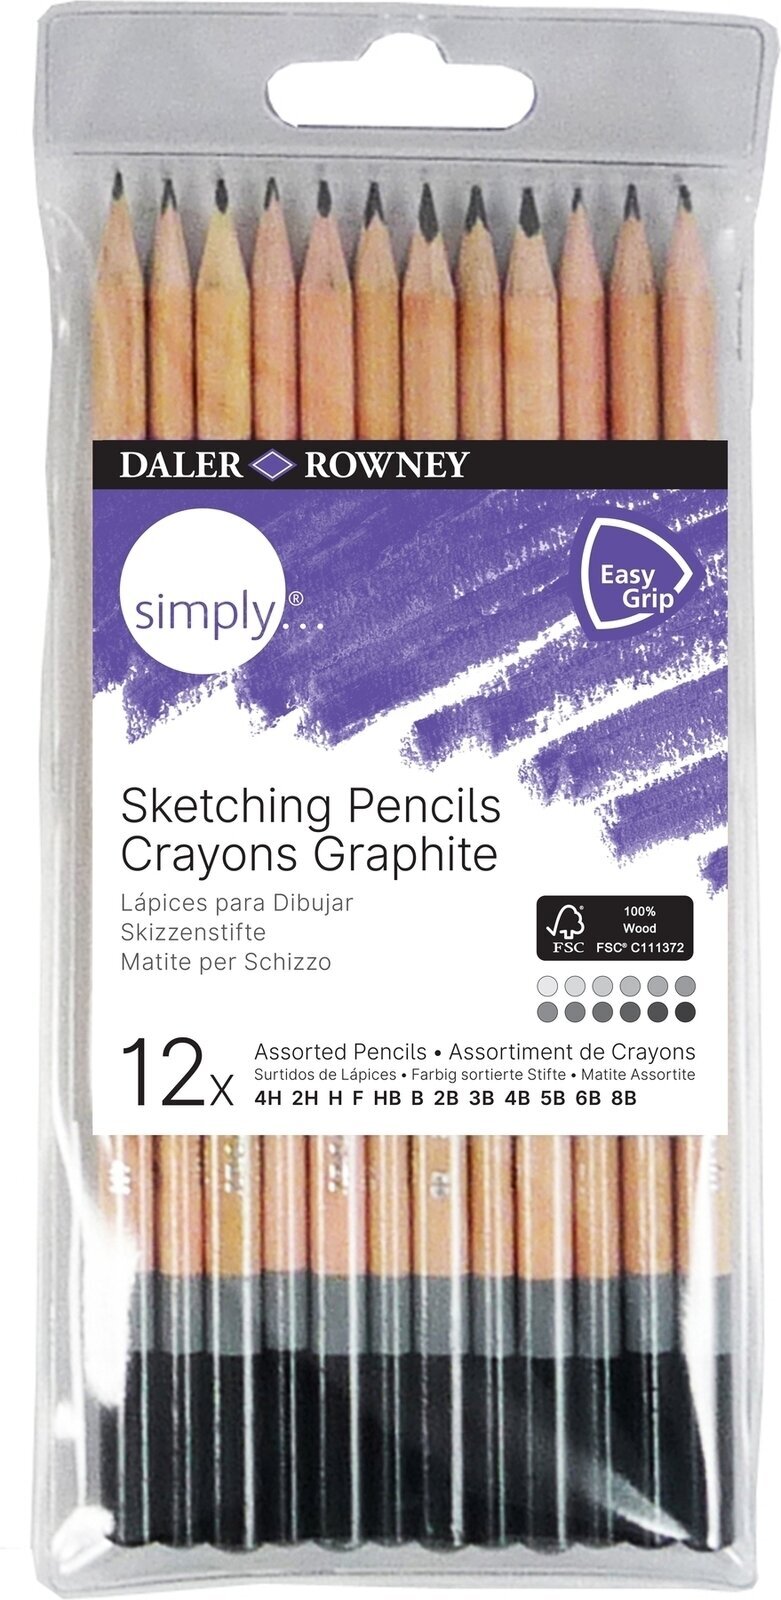 Graphitstiften Daler Rowney Simply Sketching Pencils Künstlerfarbstifte Set 12 Stck